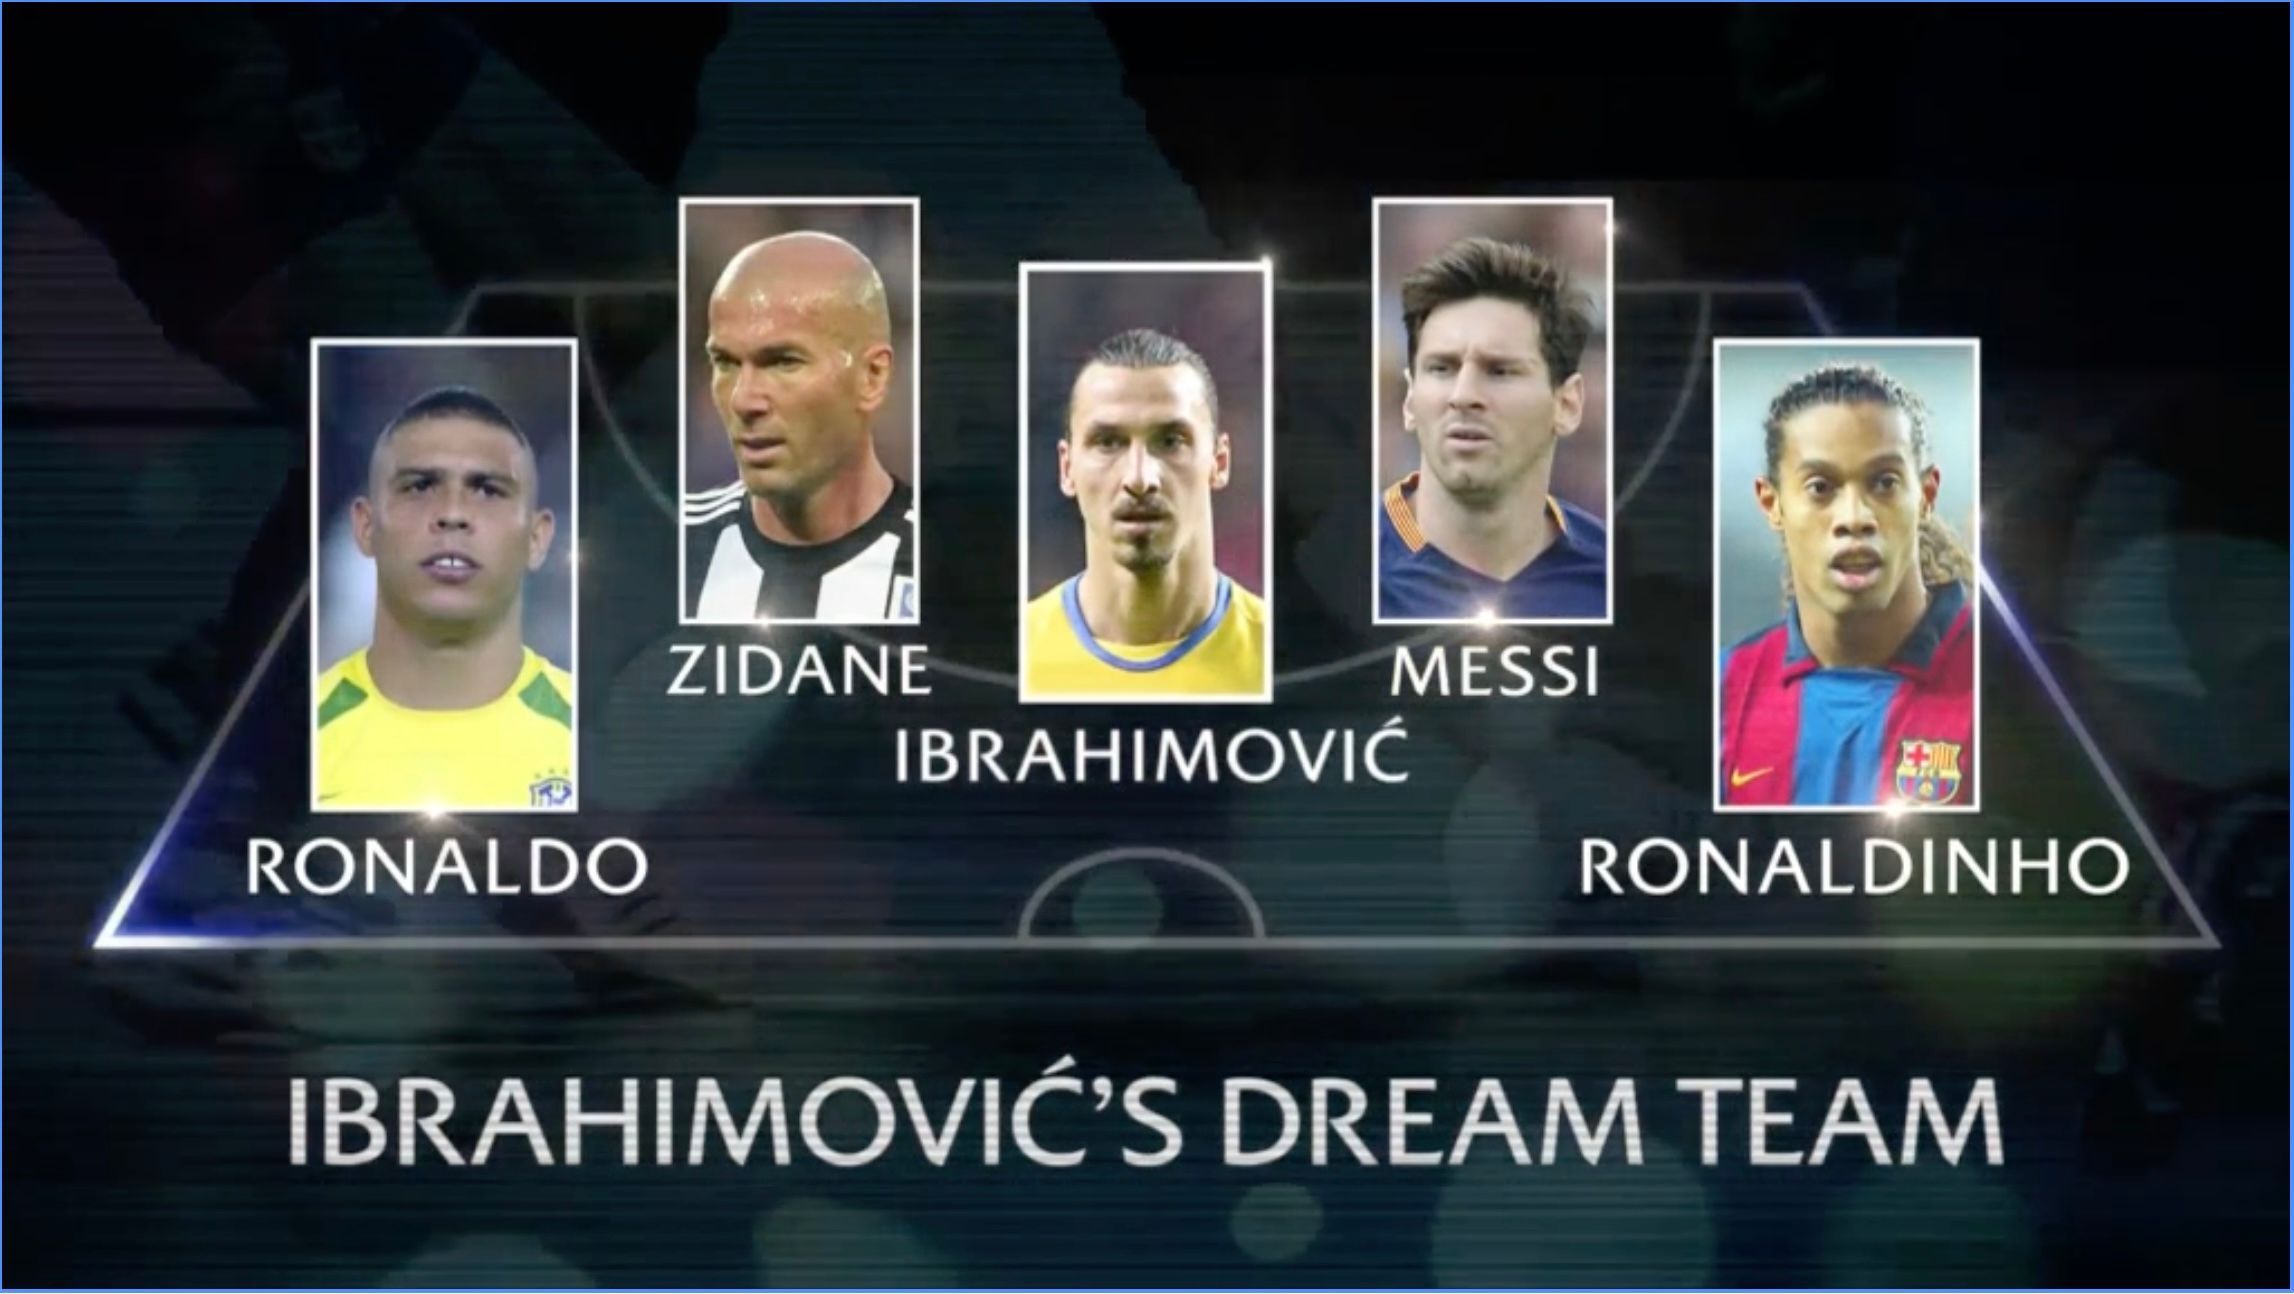 Zlatan Ibrahimovic's Dream 5-a-side team